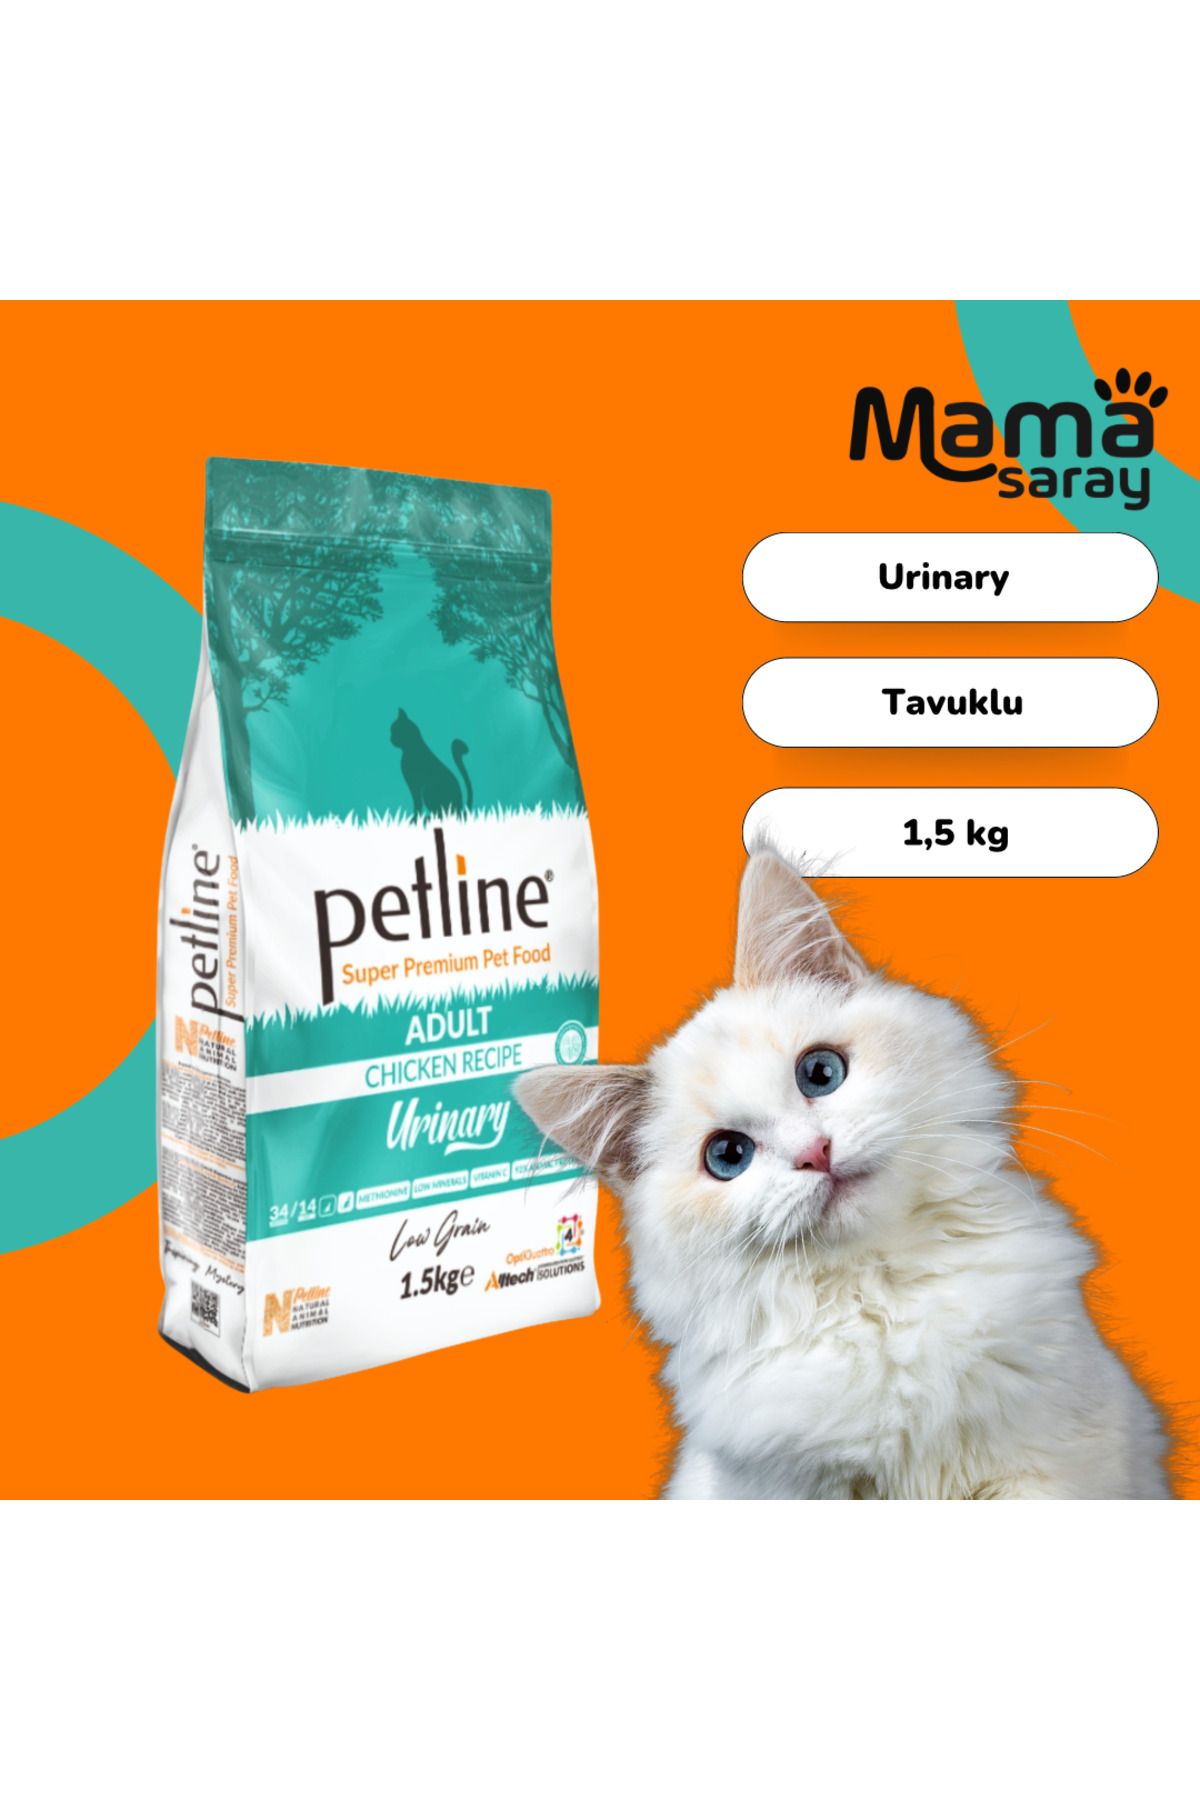 Petline 1,5 Kg Urinary Tavuklu Yetişkin Kedi Maması - Idrar Yolu Destek